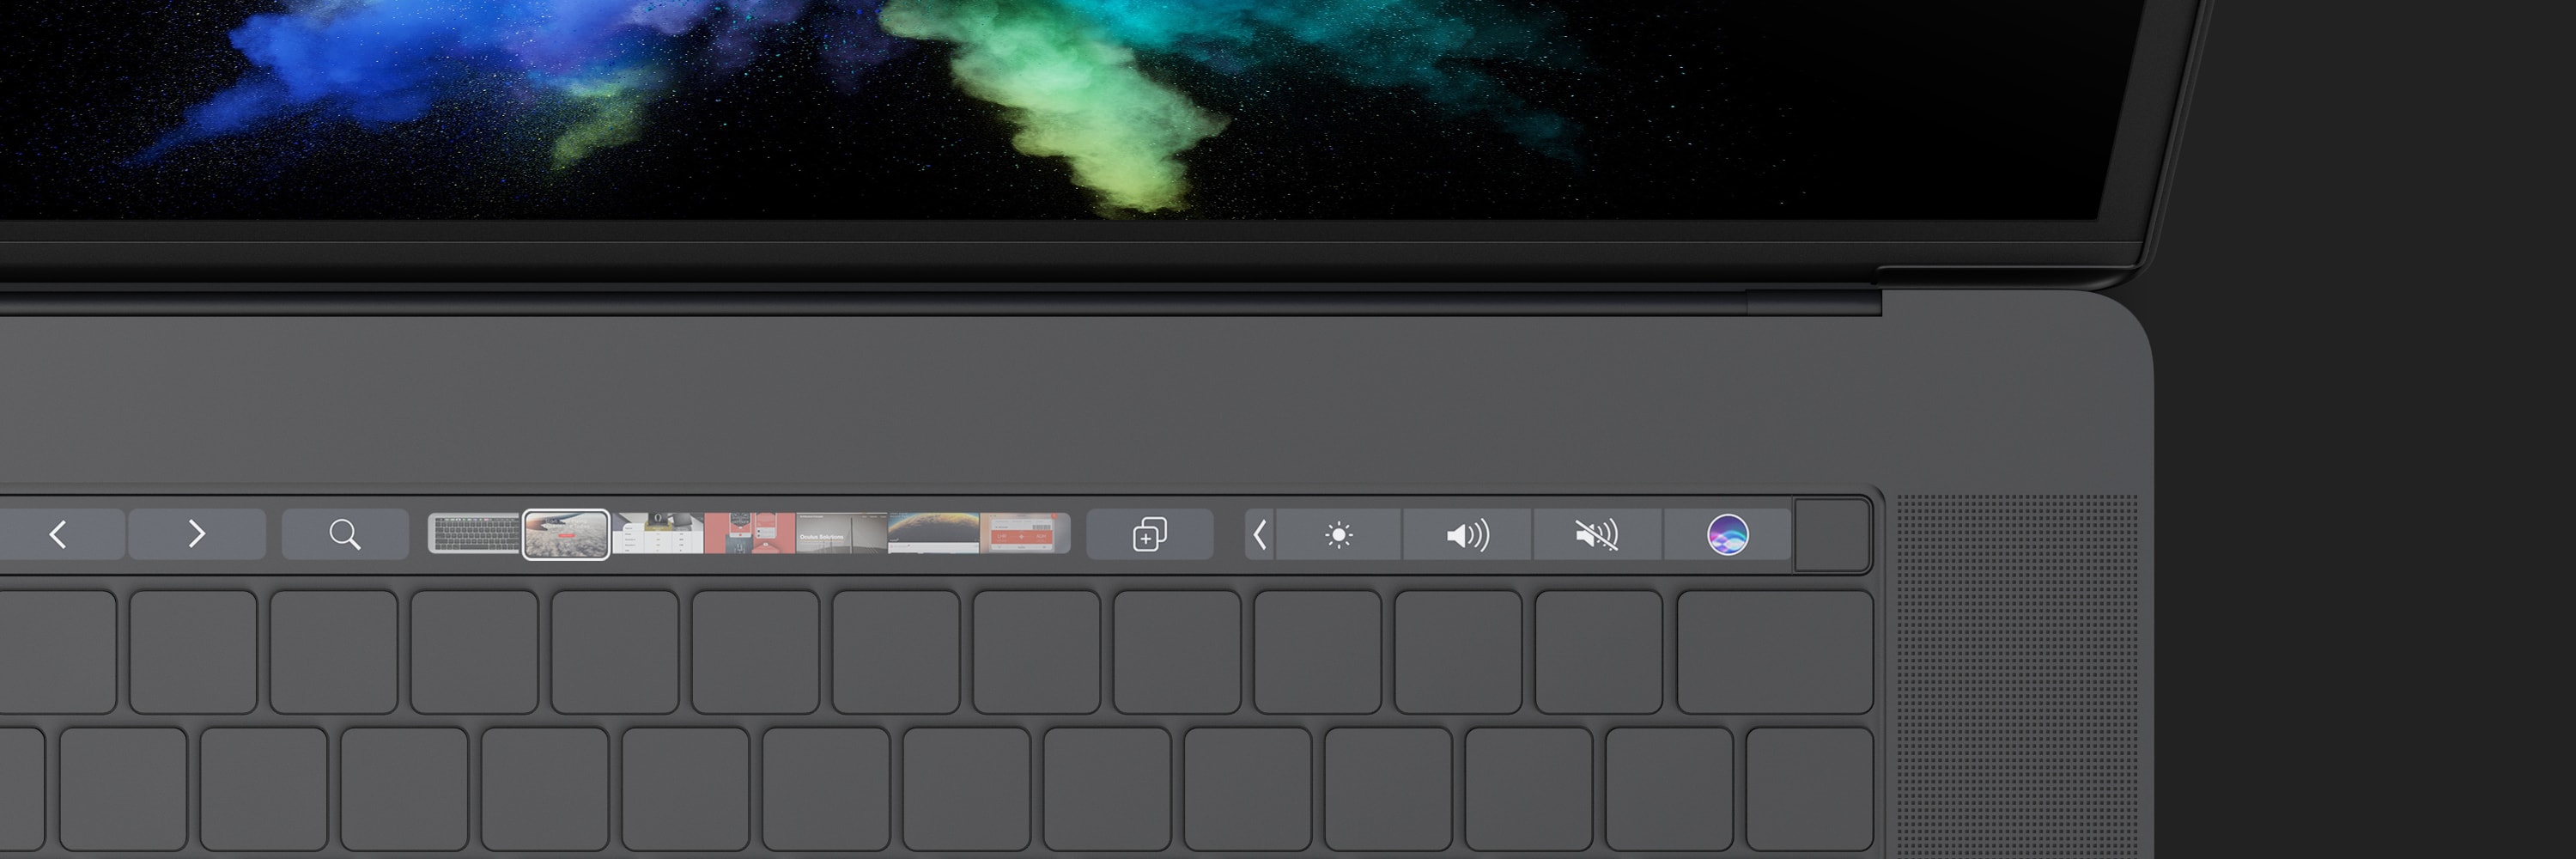 MacBook Pro笔记本电脑屏幕界面设计预览顶视图样机 Clay MacBook Pro 15" with Touch Bar, Top View Mockup插图(6)